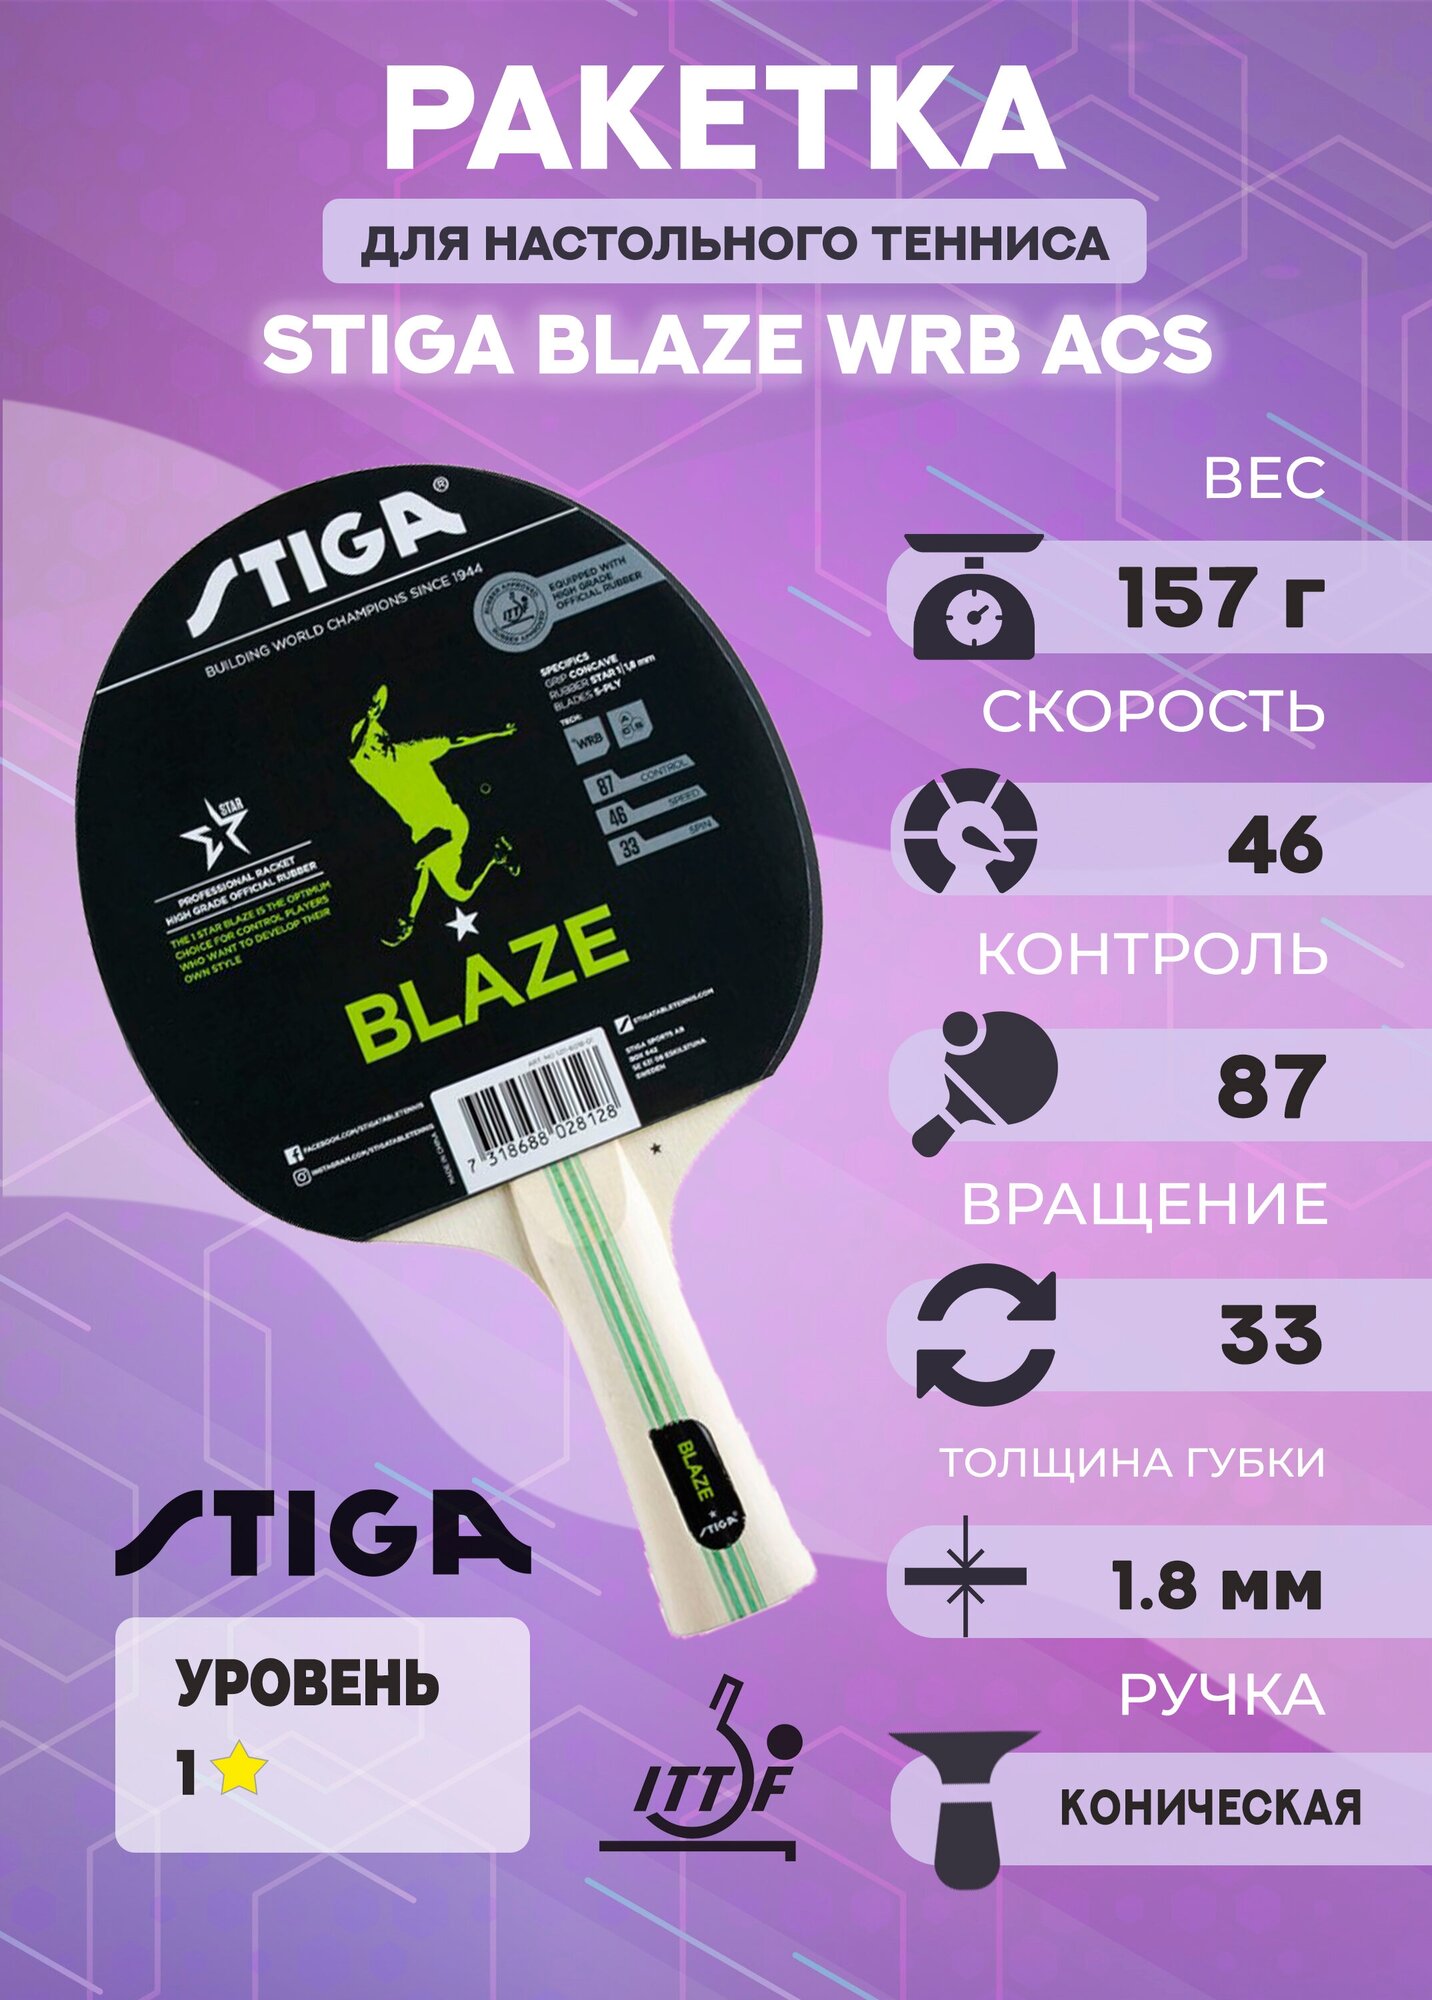 Ракетка для настольного тенниса Stiga Blaze WRB ACS